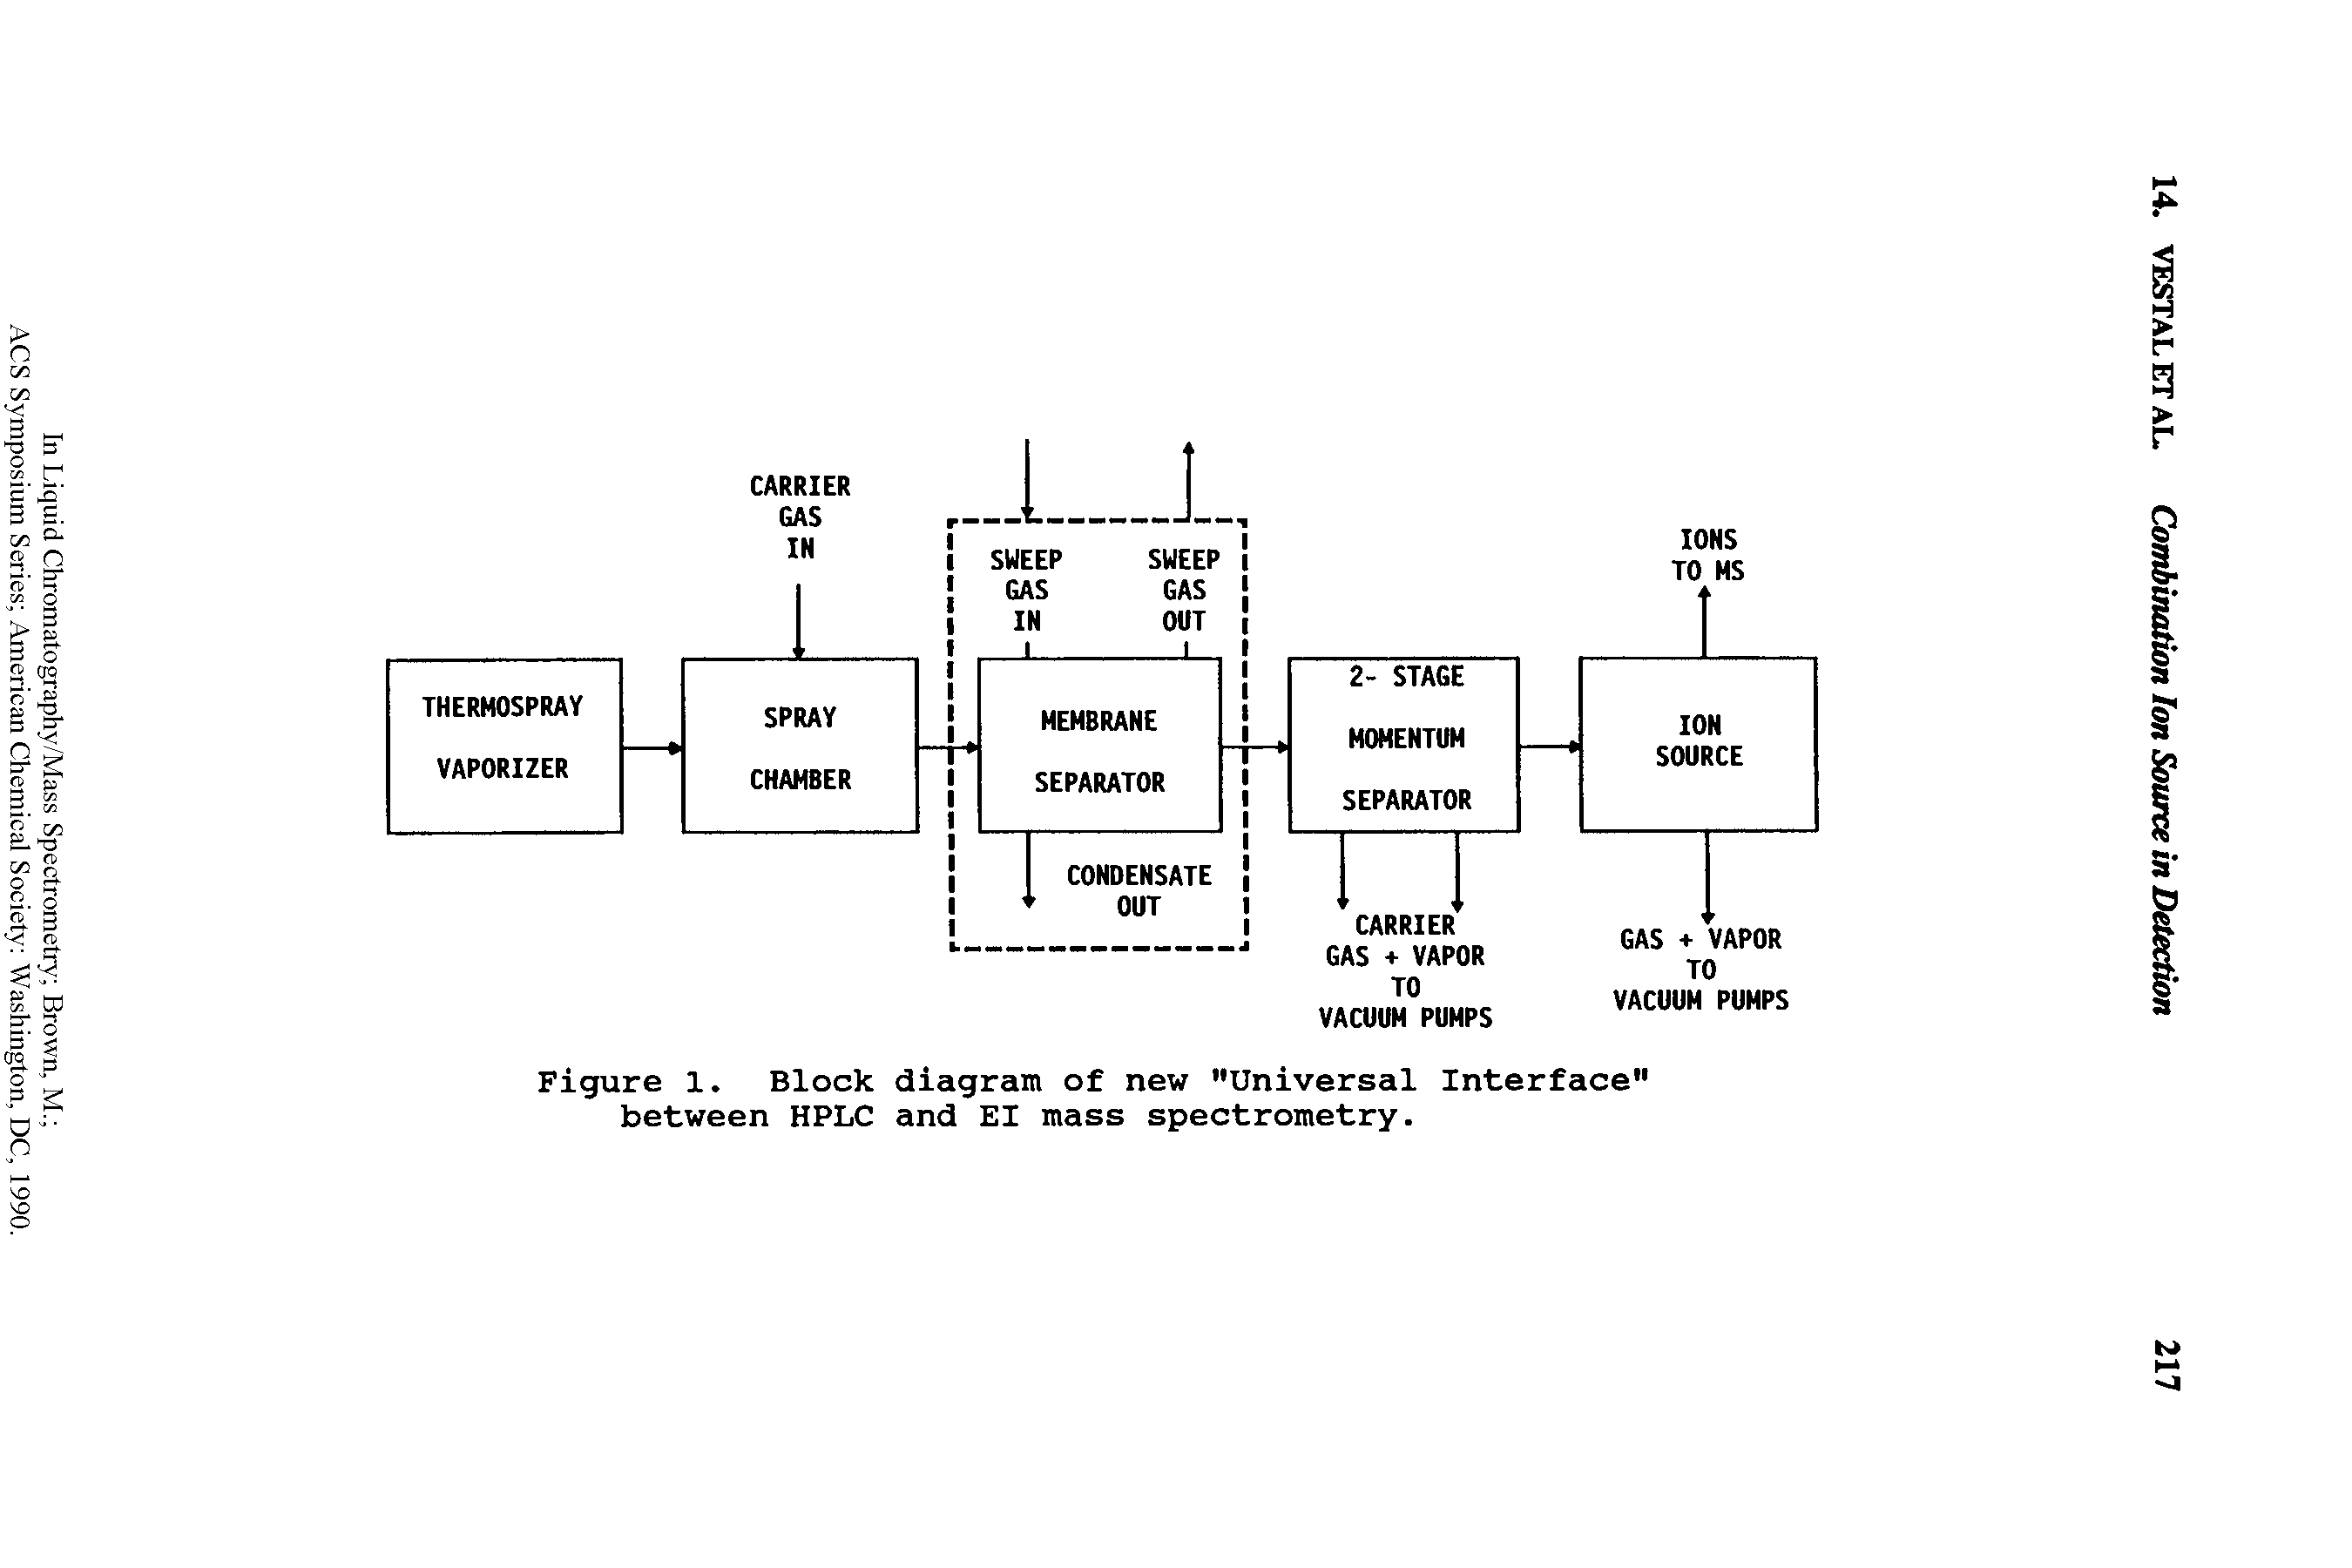 Figure 1. Block diagram of new "Universal Interface" between HPLC and El mass spectrometry.